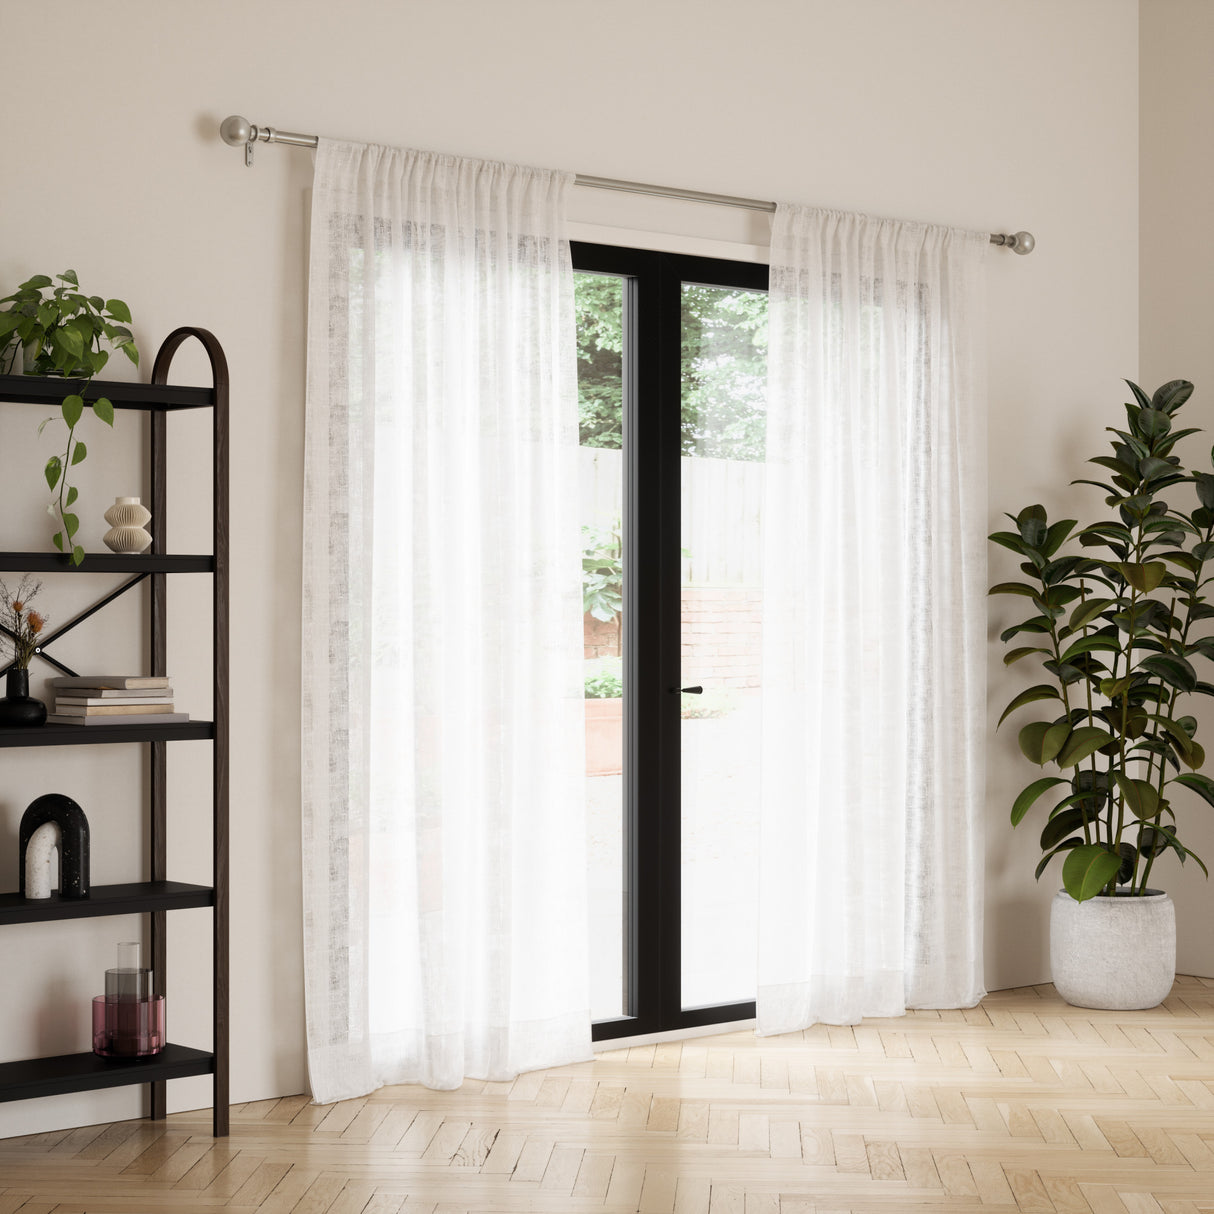 Single Curtain Rods | color: Eco-Friendly Nickel | size: 72-144" (183-365 cm) | diameter: 1" (2.5 cm)